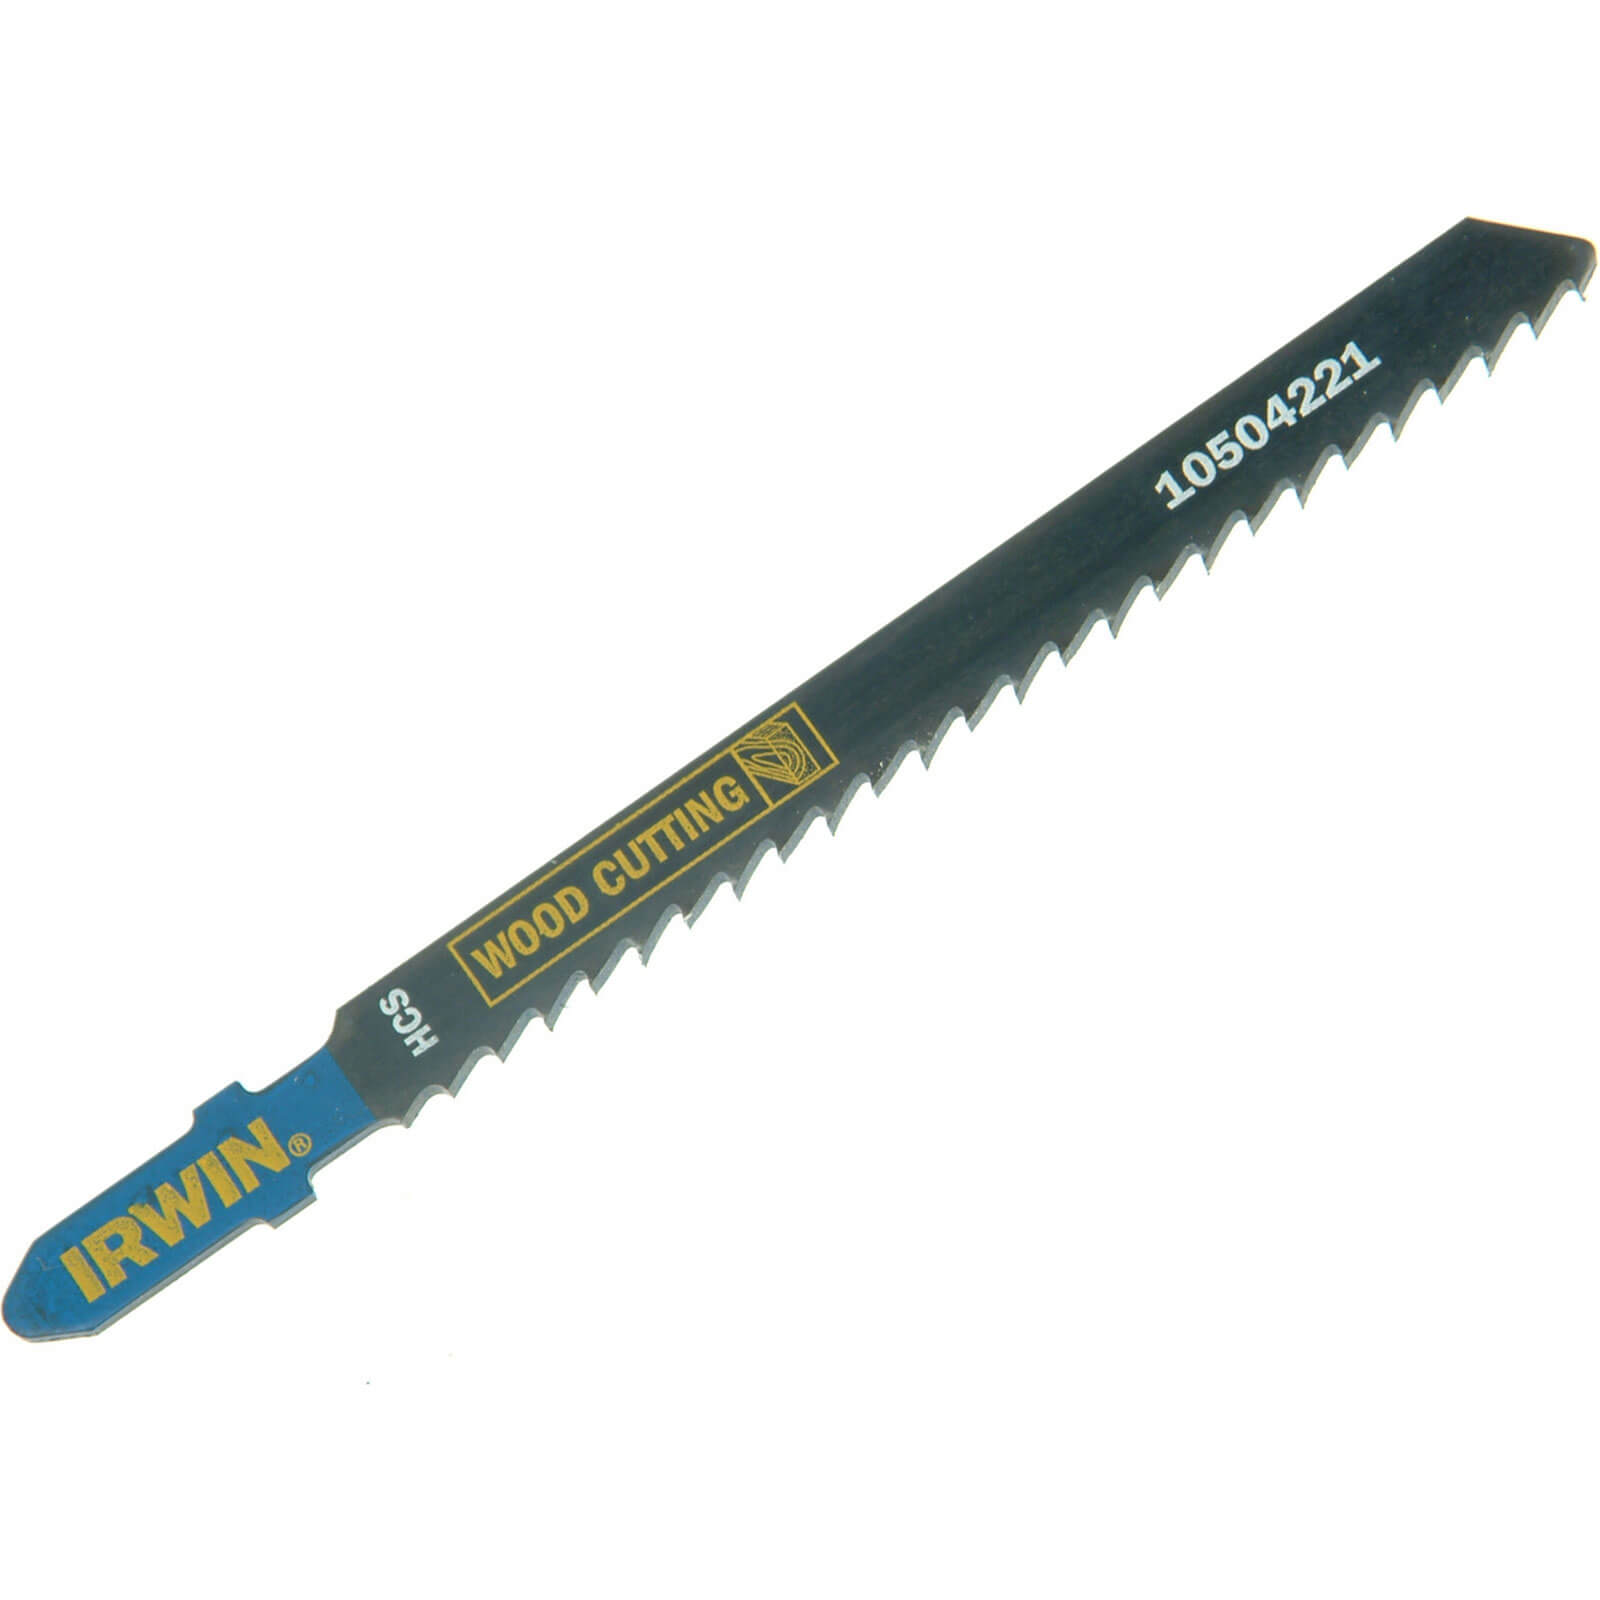 Photos - Power Tool Accessory IRWIN T101BR T Shank Wood Cutting Jigsaw Blades Pack of 5 IRW10504223 